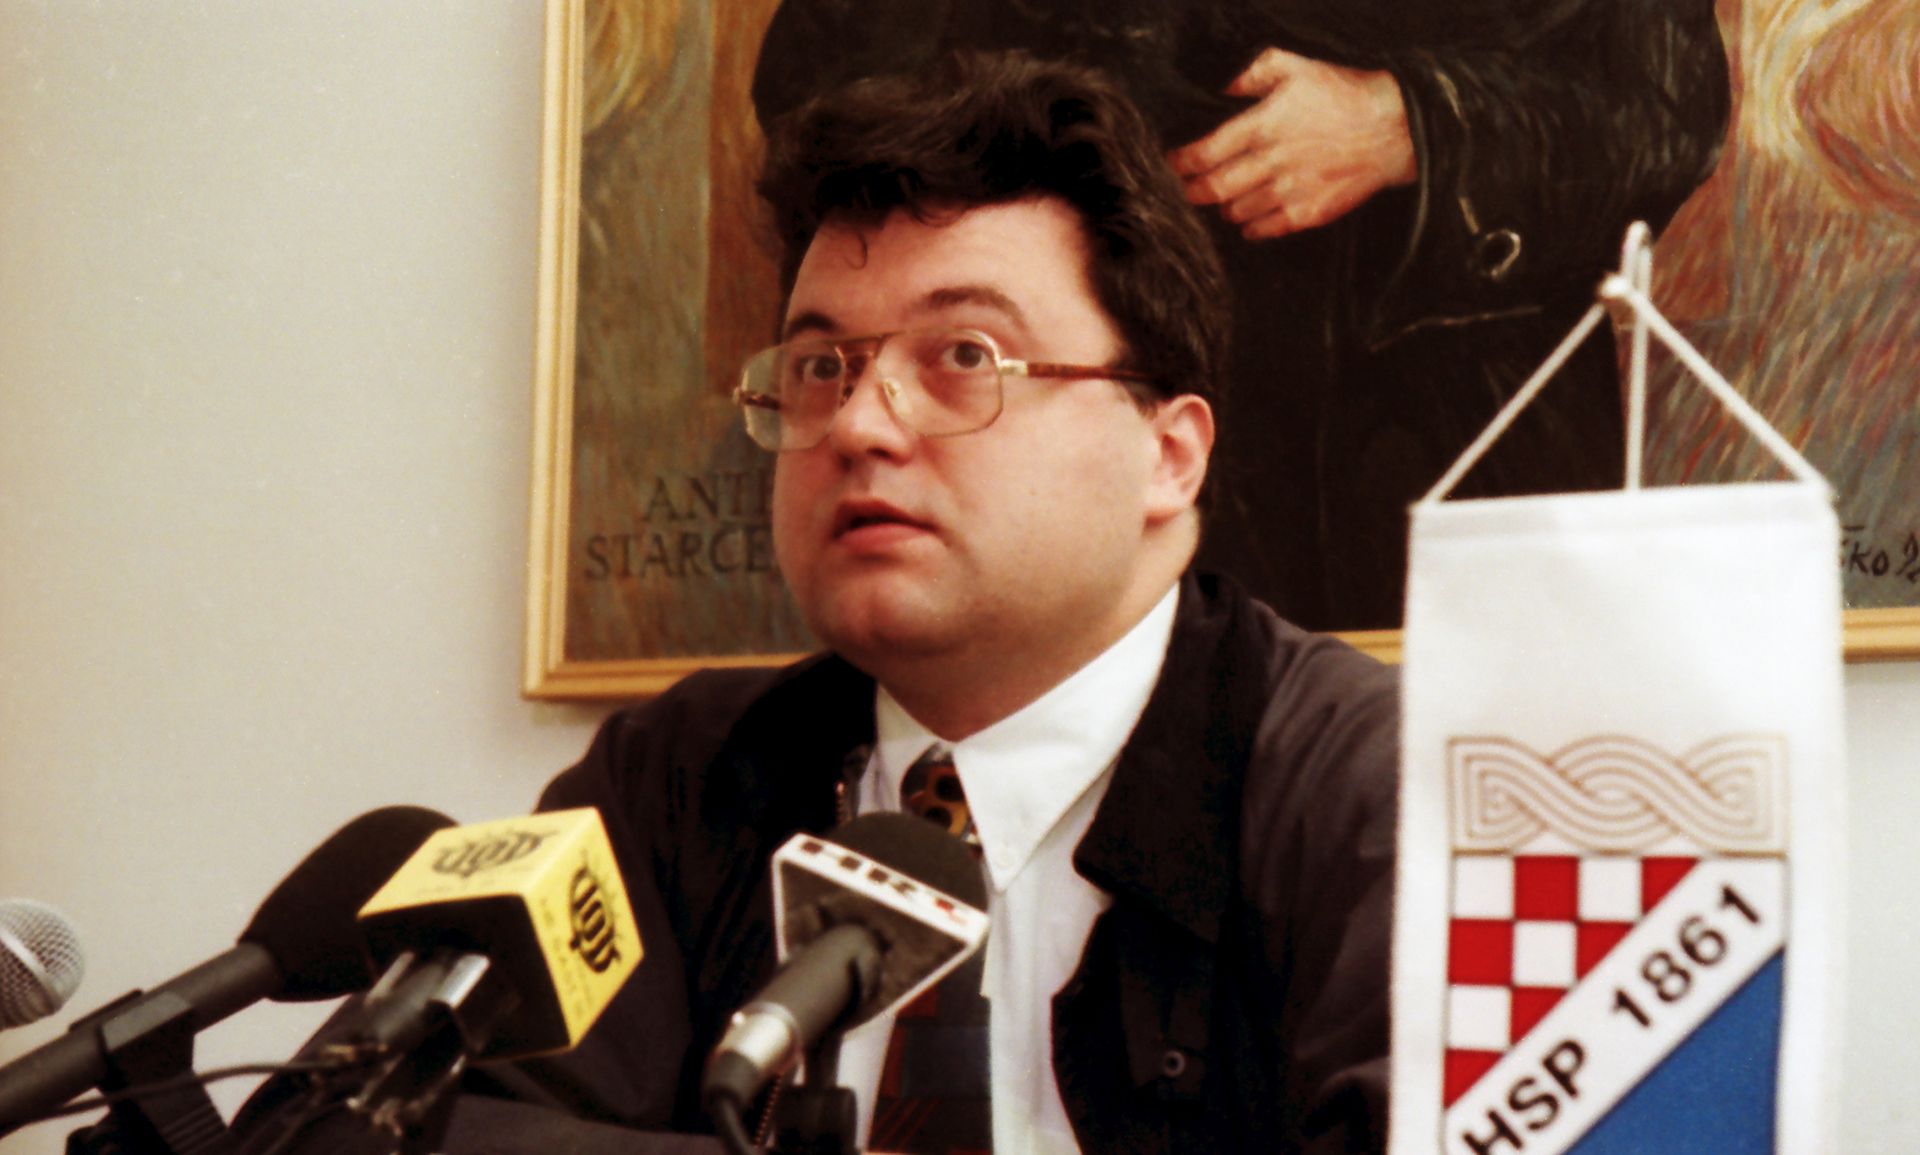 Konferencija za novinstvo predsjednika Hrvatske stranke prava 1861. (HSP 1861.)Dobroslava Parage, 19.08.1997.                             (715-97)